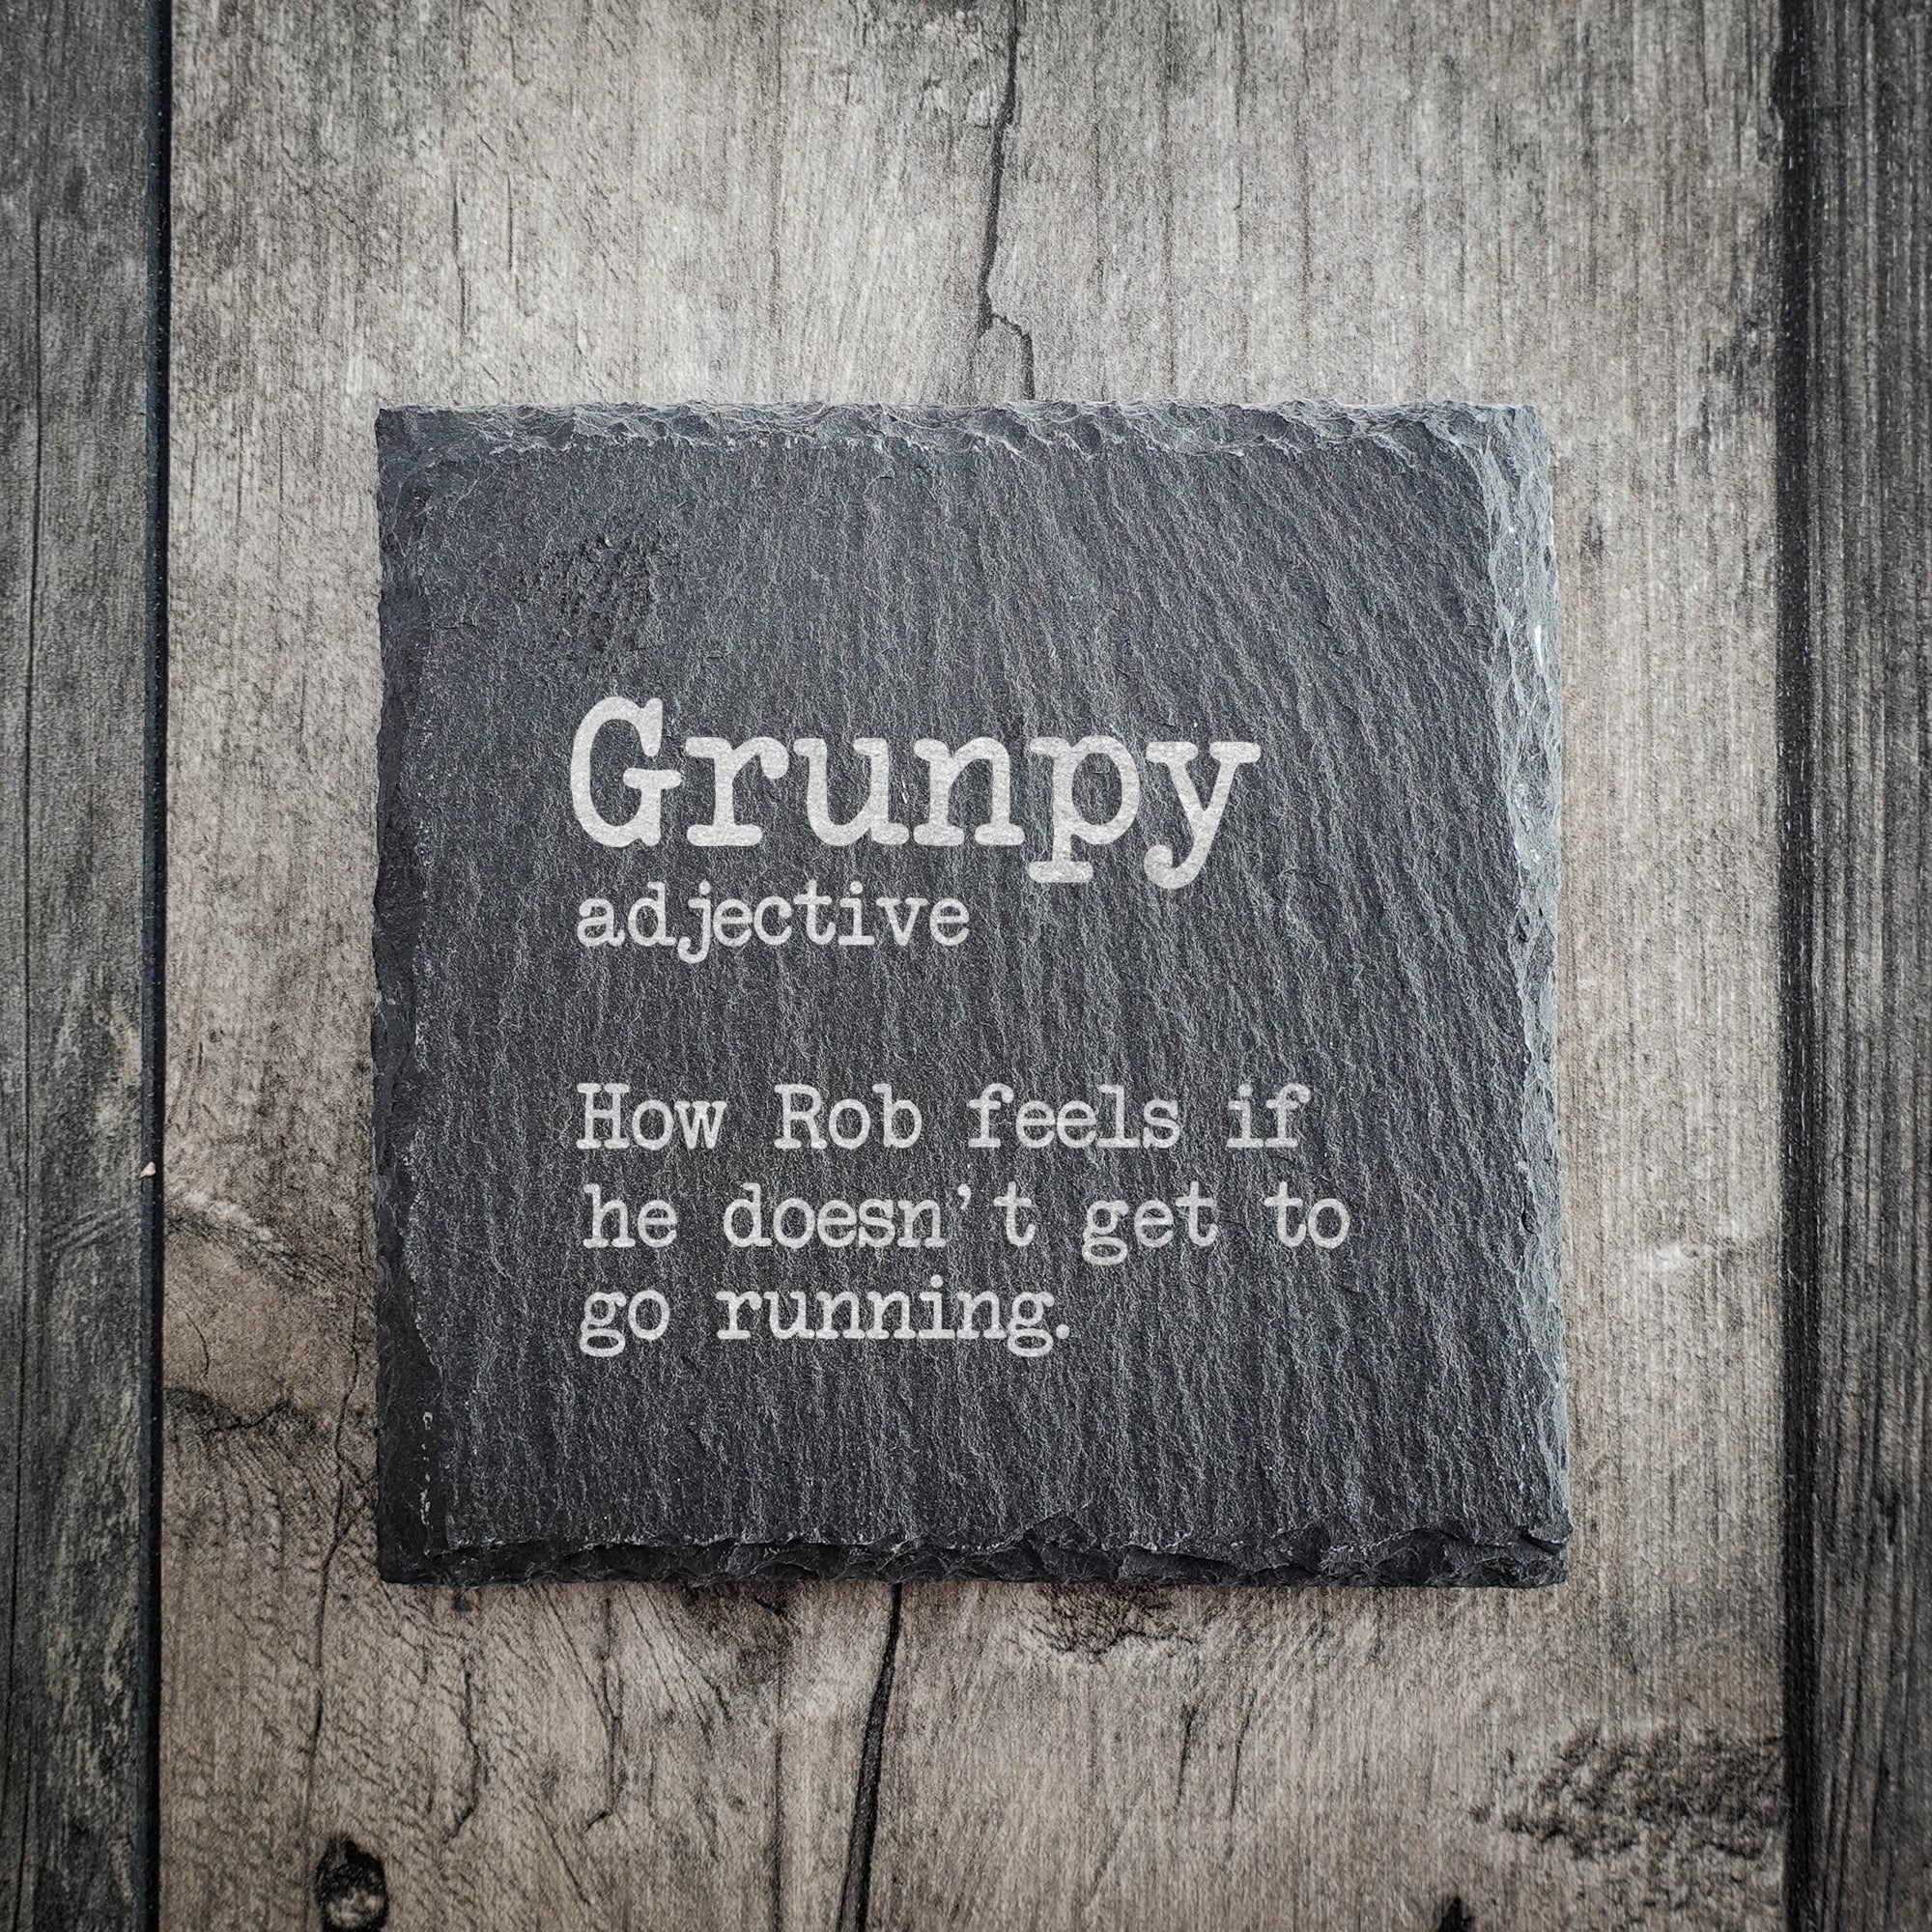 Personalised Grunpy Coaster Riven Slate Coaster